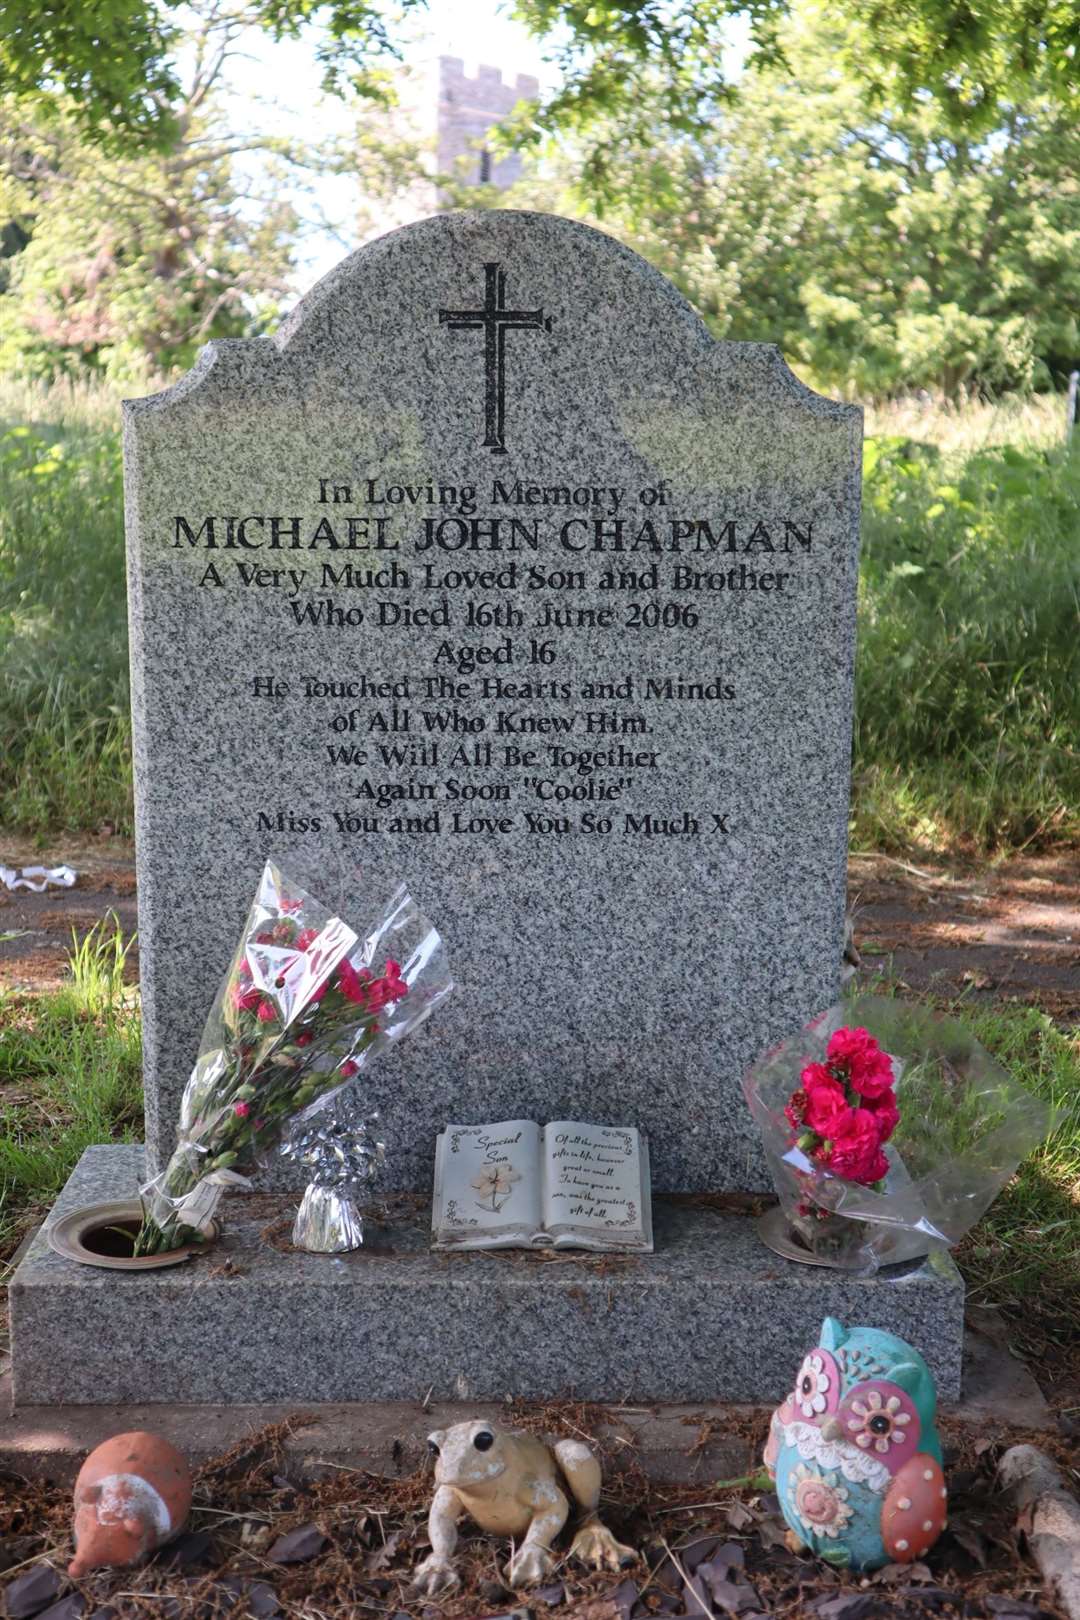 Michael Chapman's grave in Bobbing churchyard